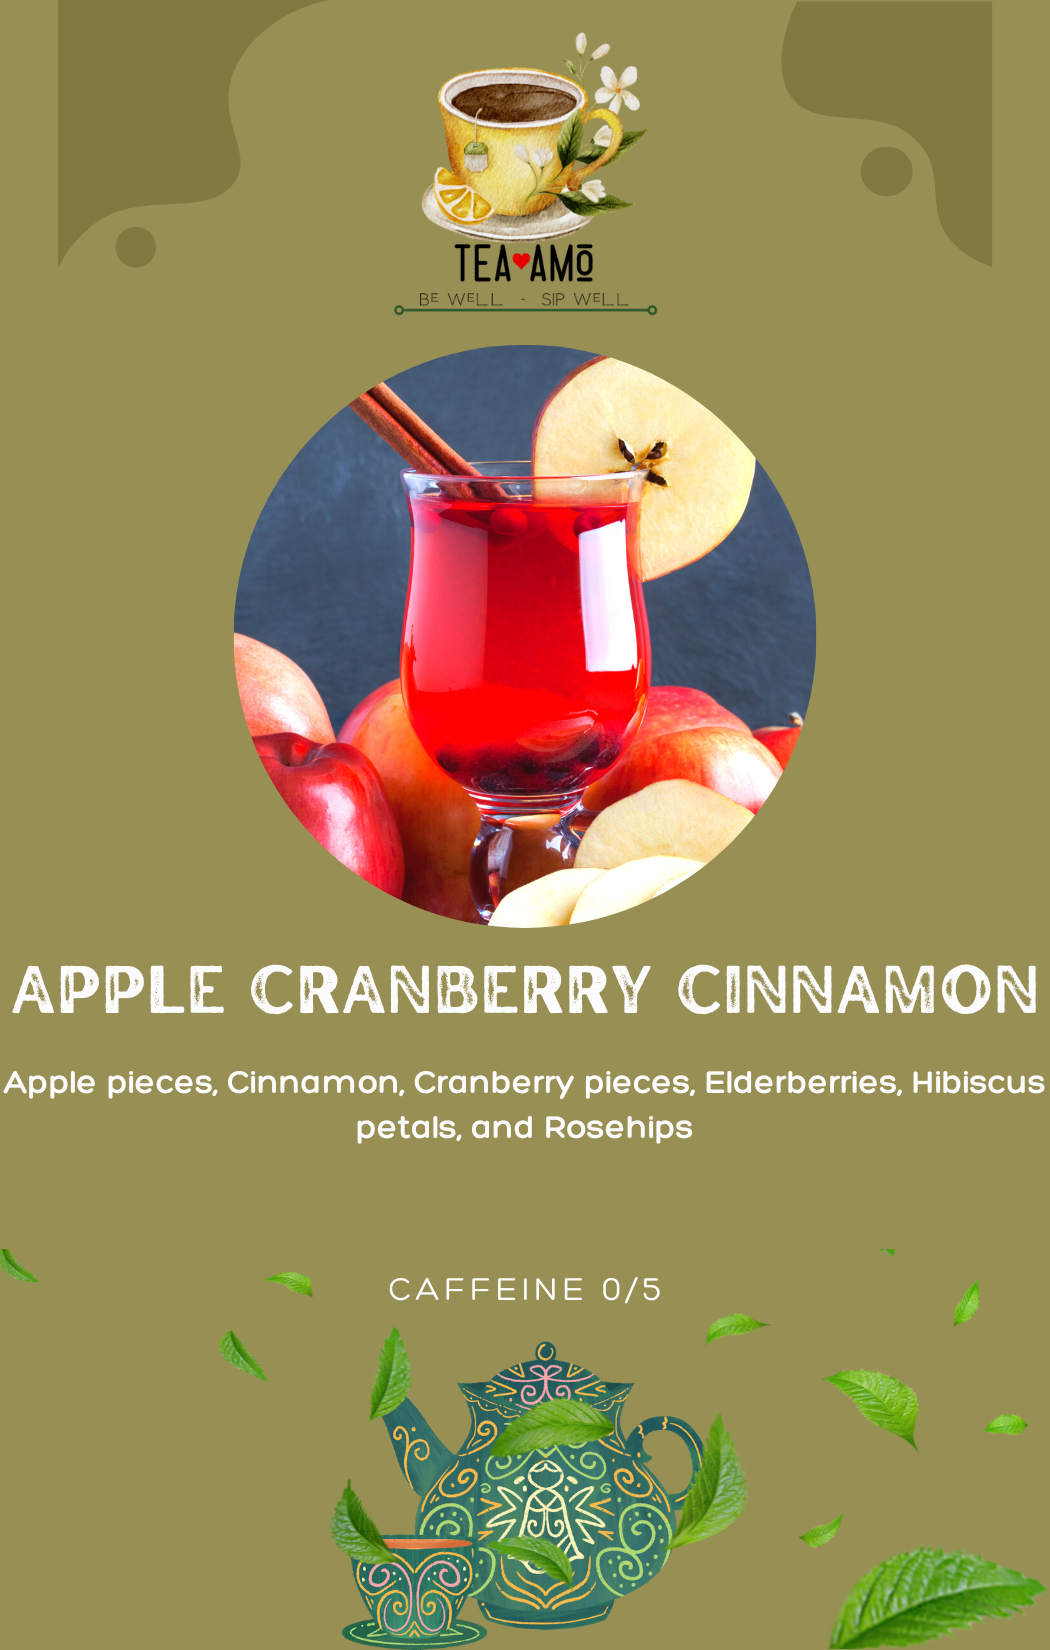 Tea Amo Wellness: Apple Cranberry Cinnamon